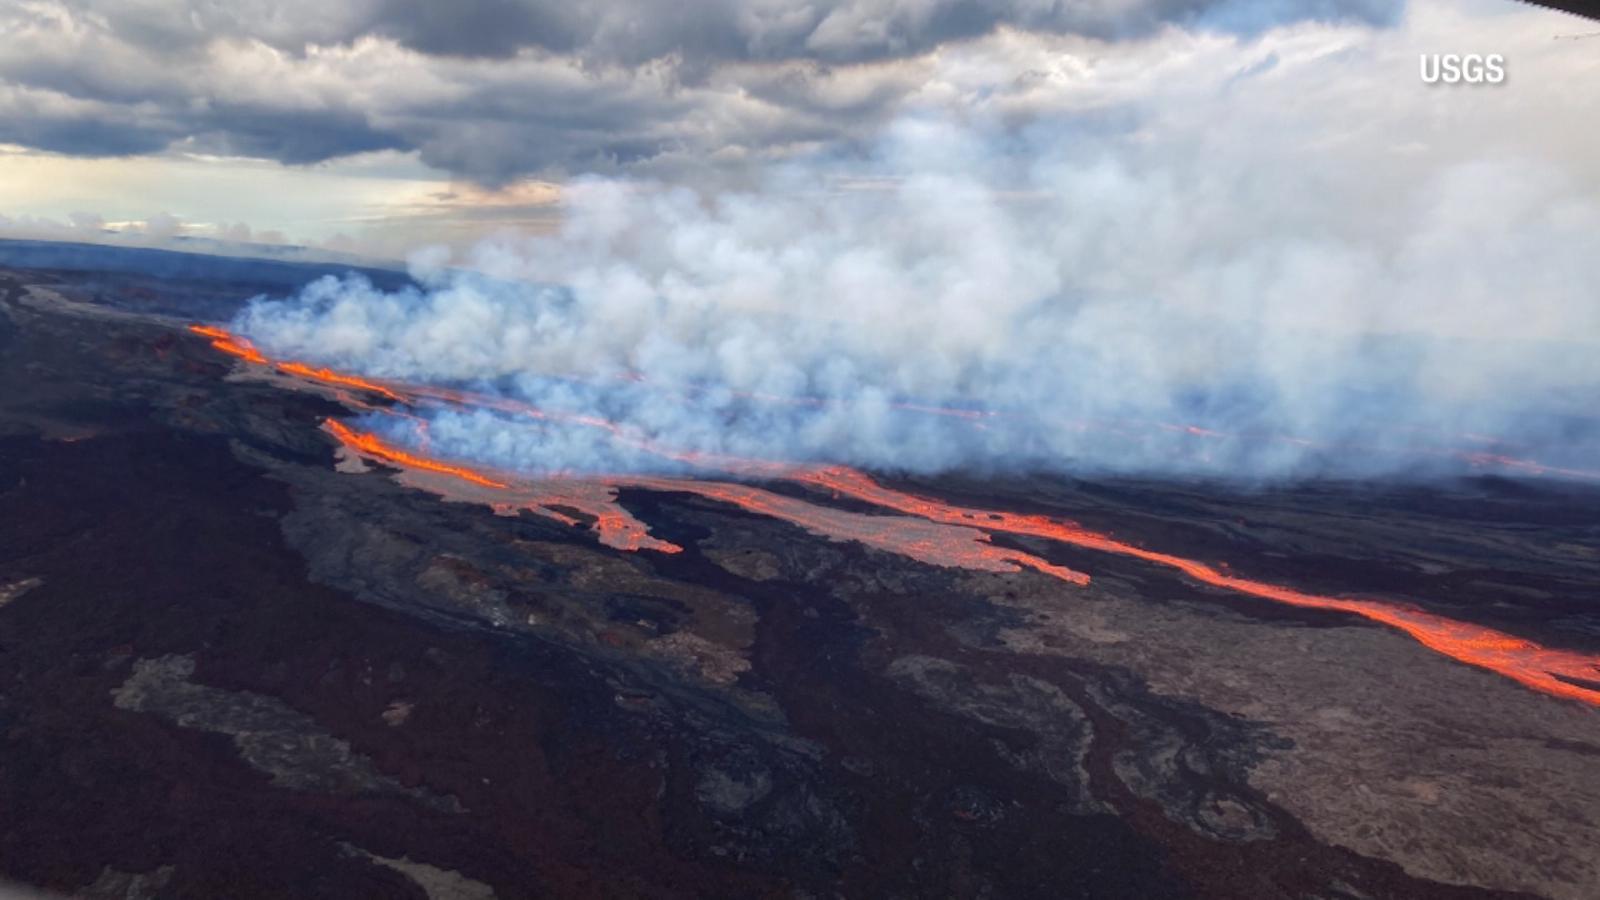 Watch The Apocalyptic Eruption Of Mauna Loa On The Big Island Of Hawaii